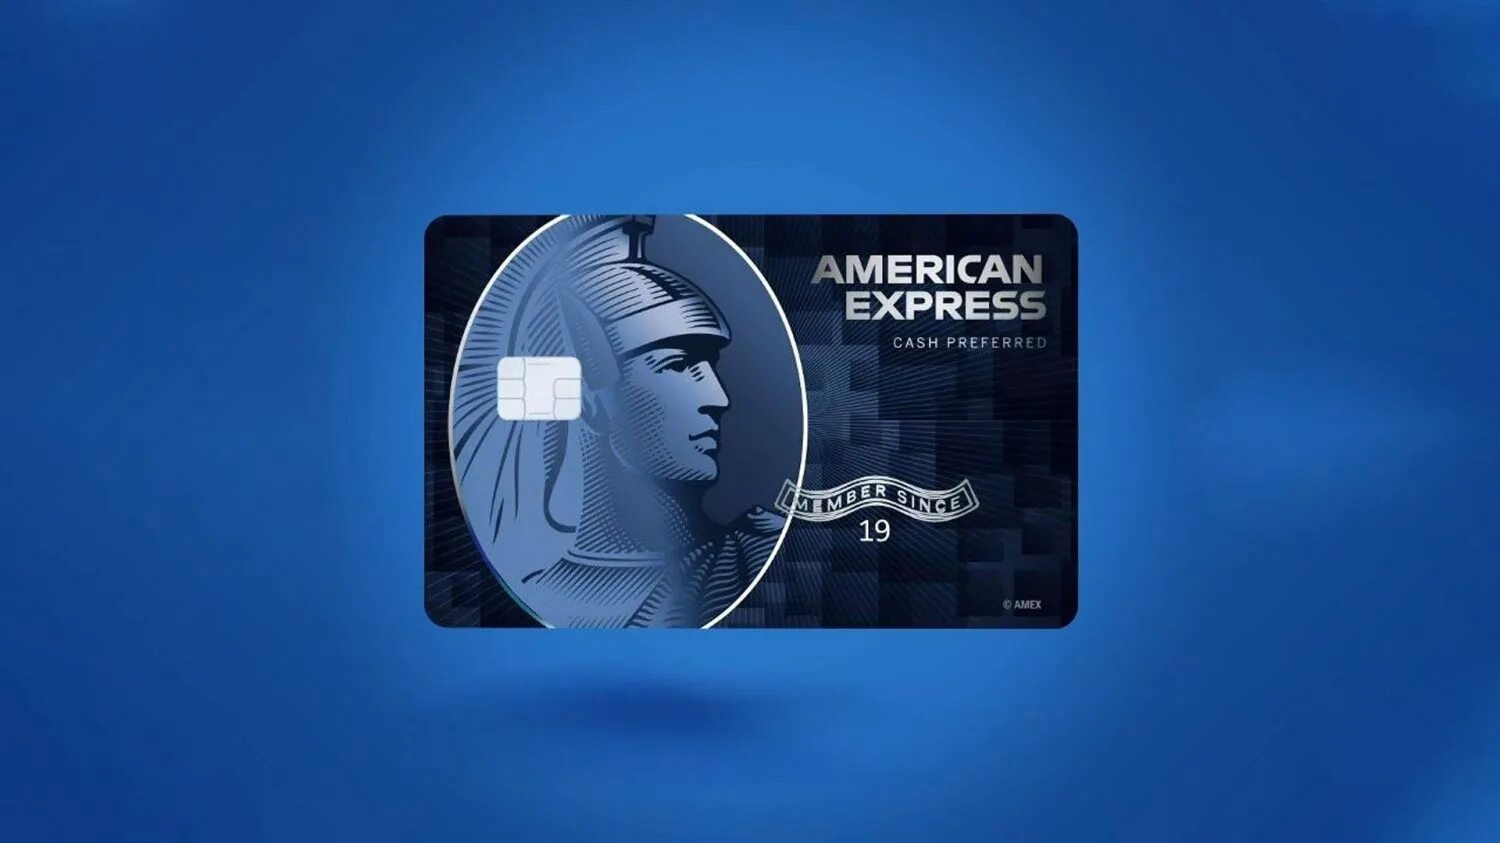 T me brand american express. Американ Американ экспресс. American Express Blue. American Express Blue Cash preferred. American Express Card.